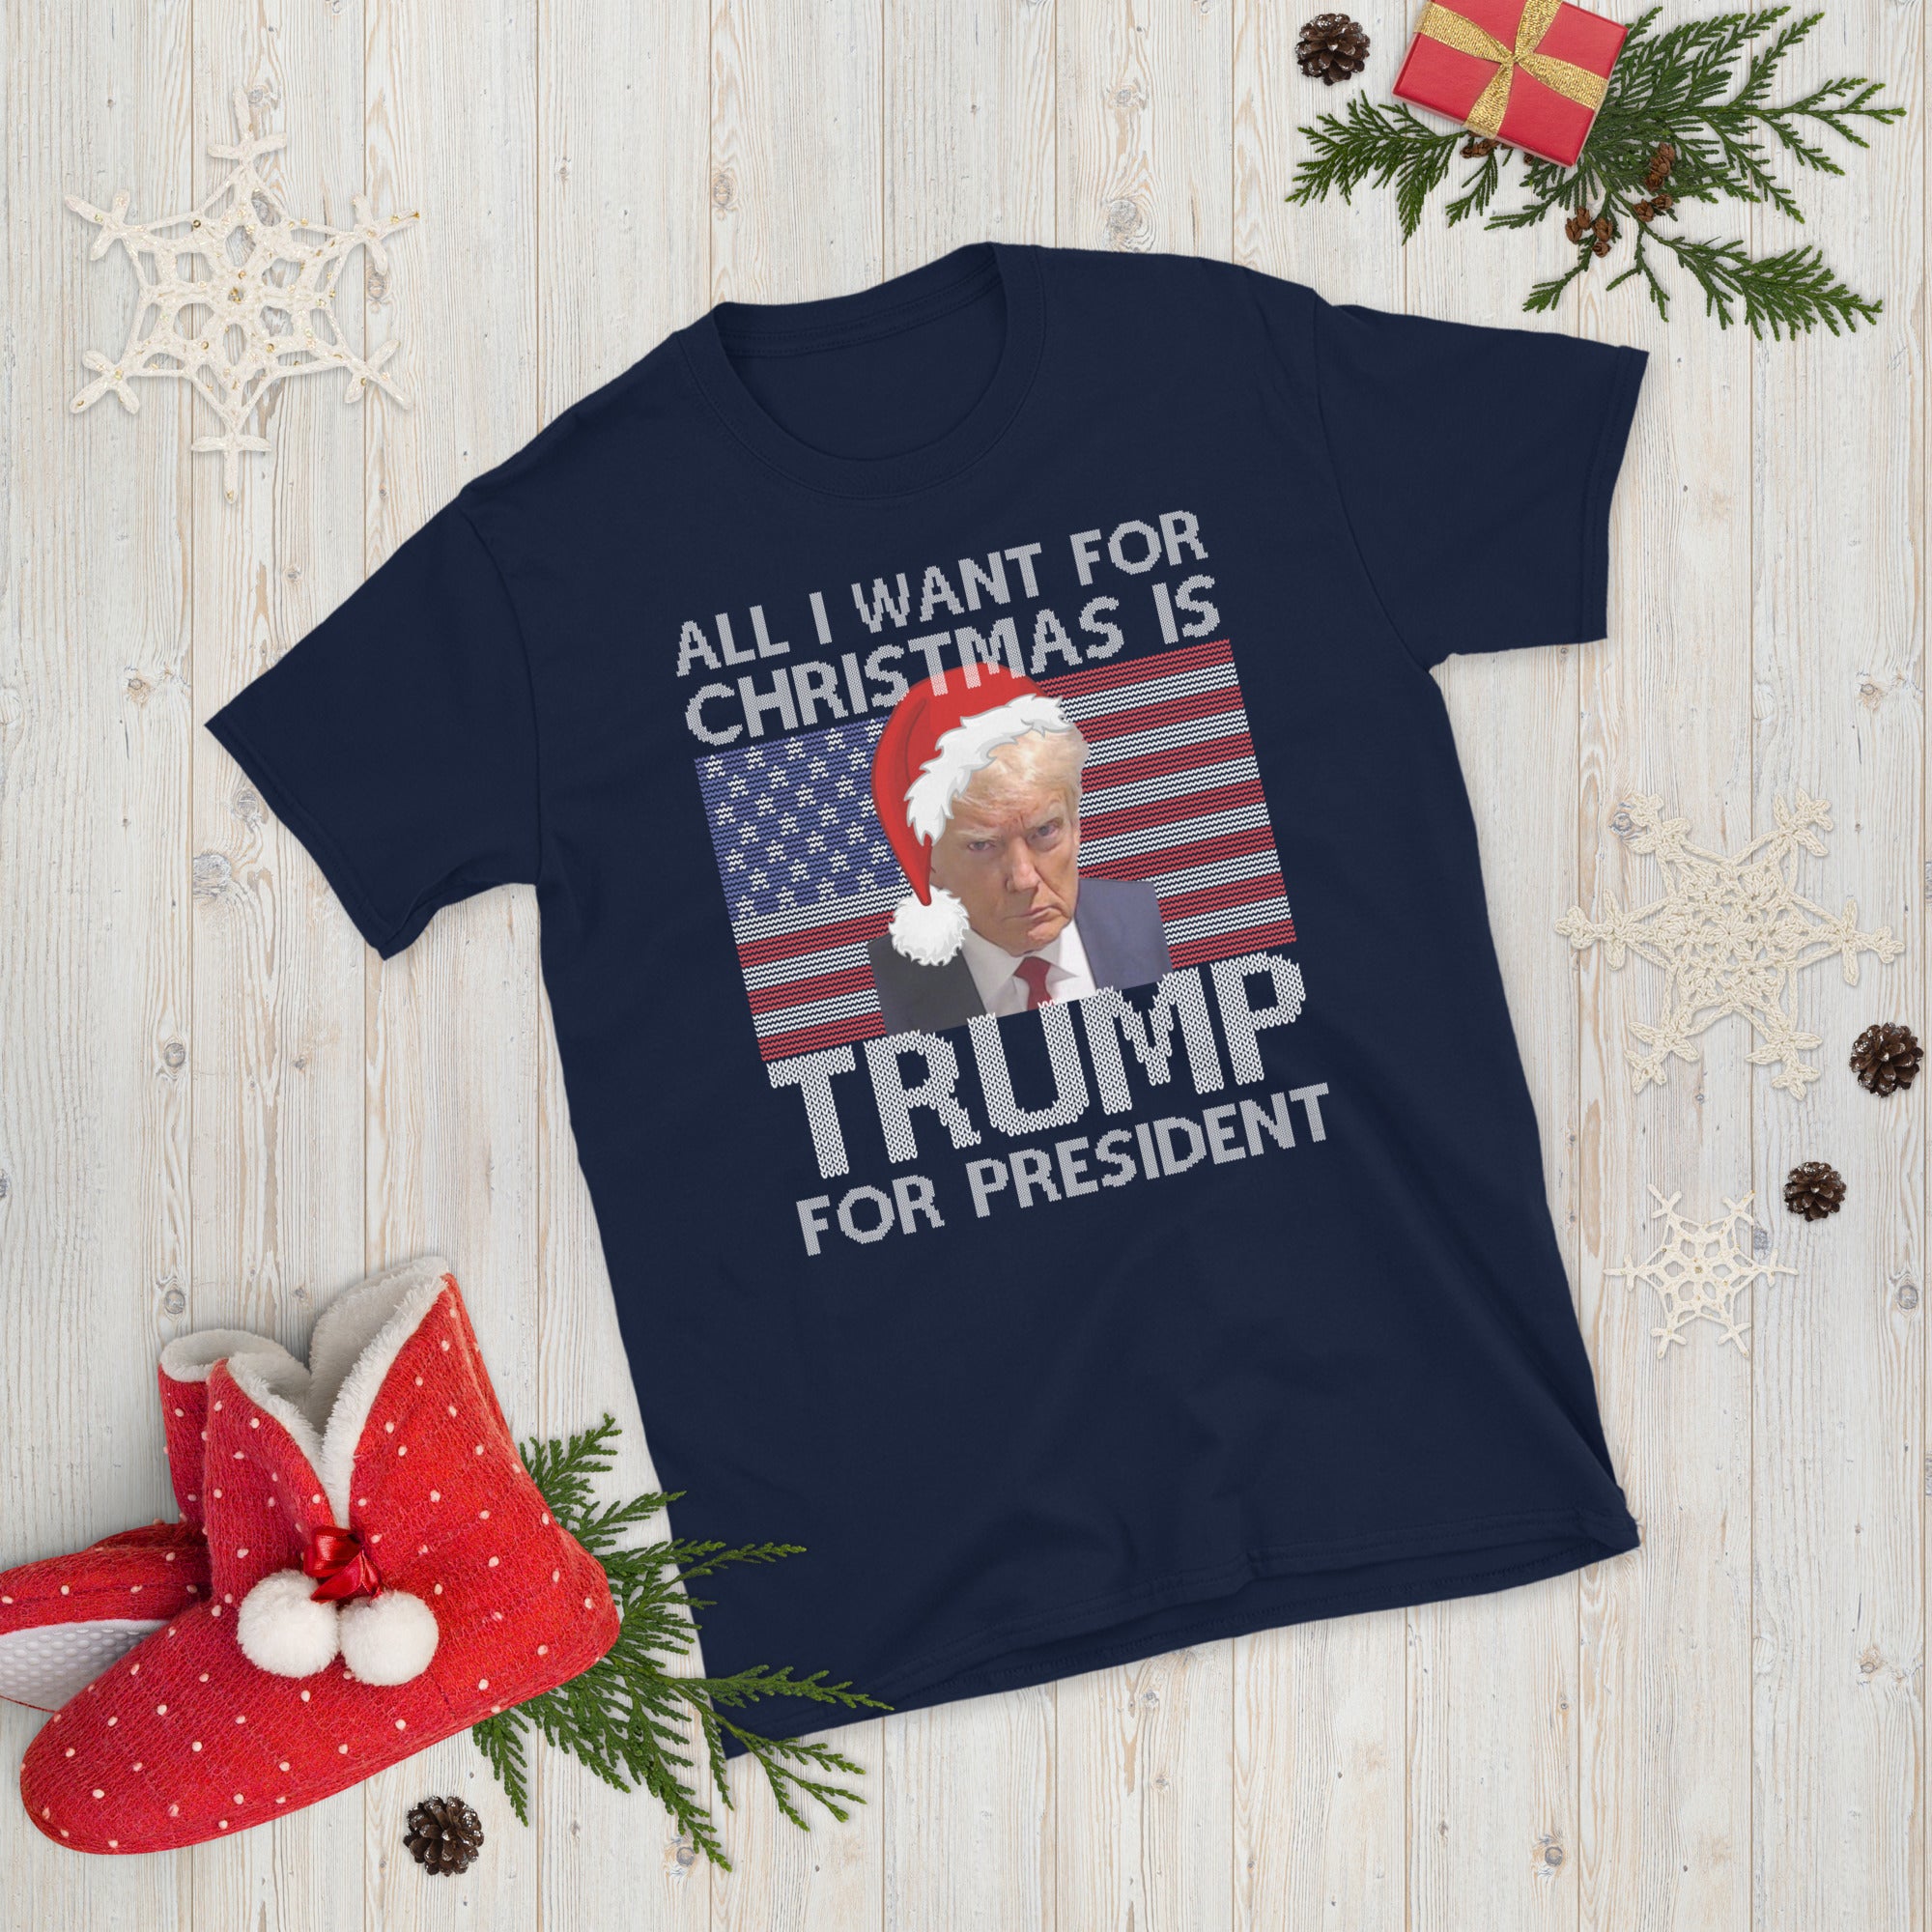 All I Want For Christmas Is Trump For President, Trumpmugshot Shirt, Funny Donald Trump Christmas TShirt, Trump Santa Xmas Ugly Christmas - Madeinsea©